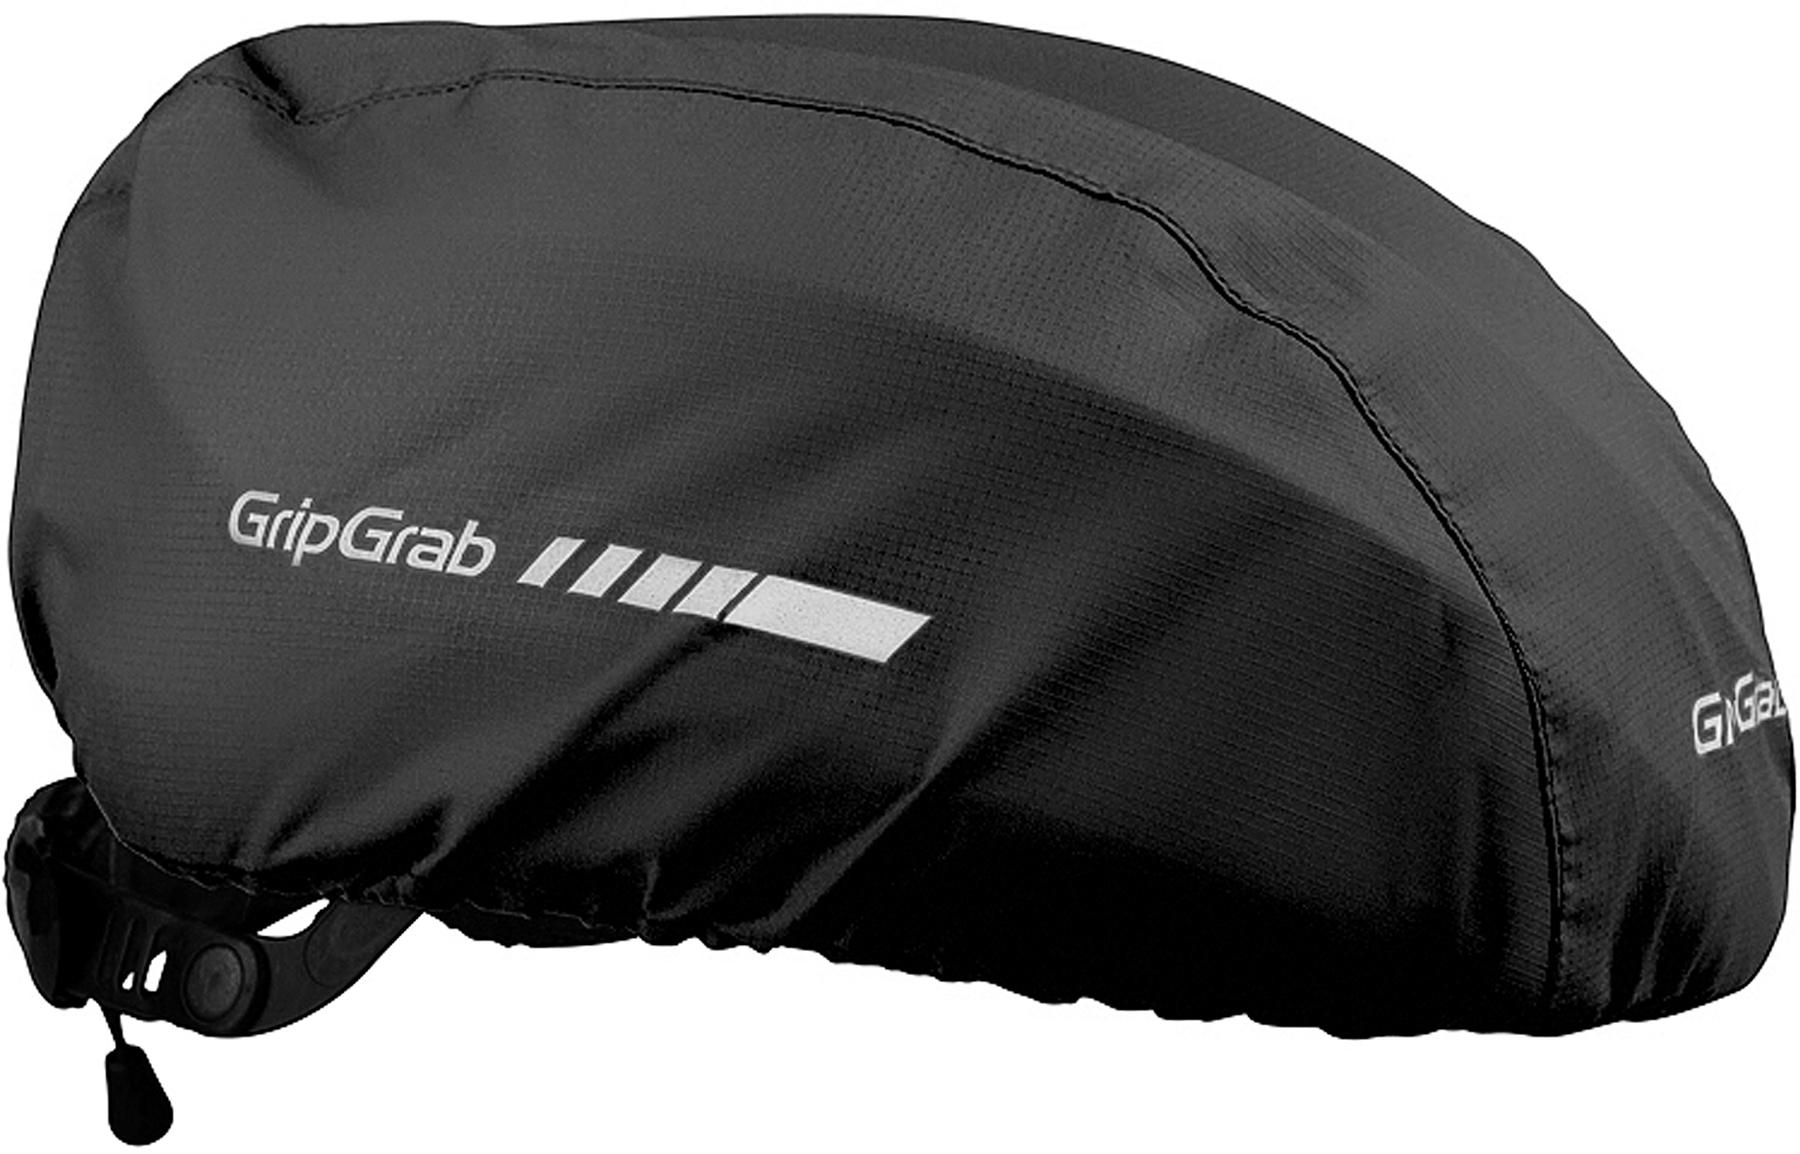 Gripgrab Helmet Cover - Black